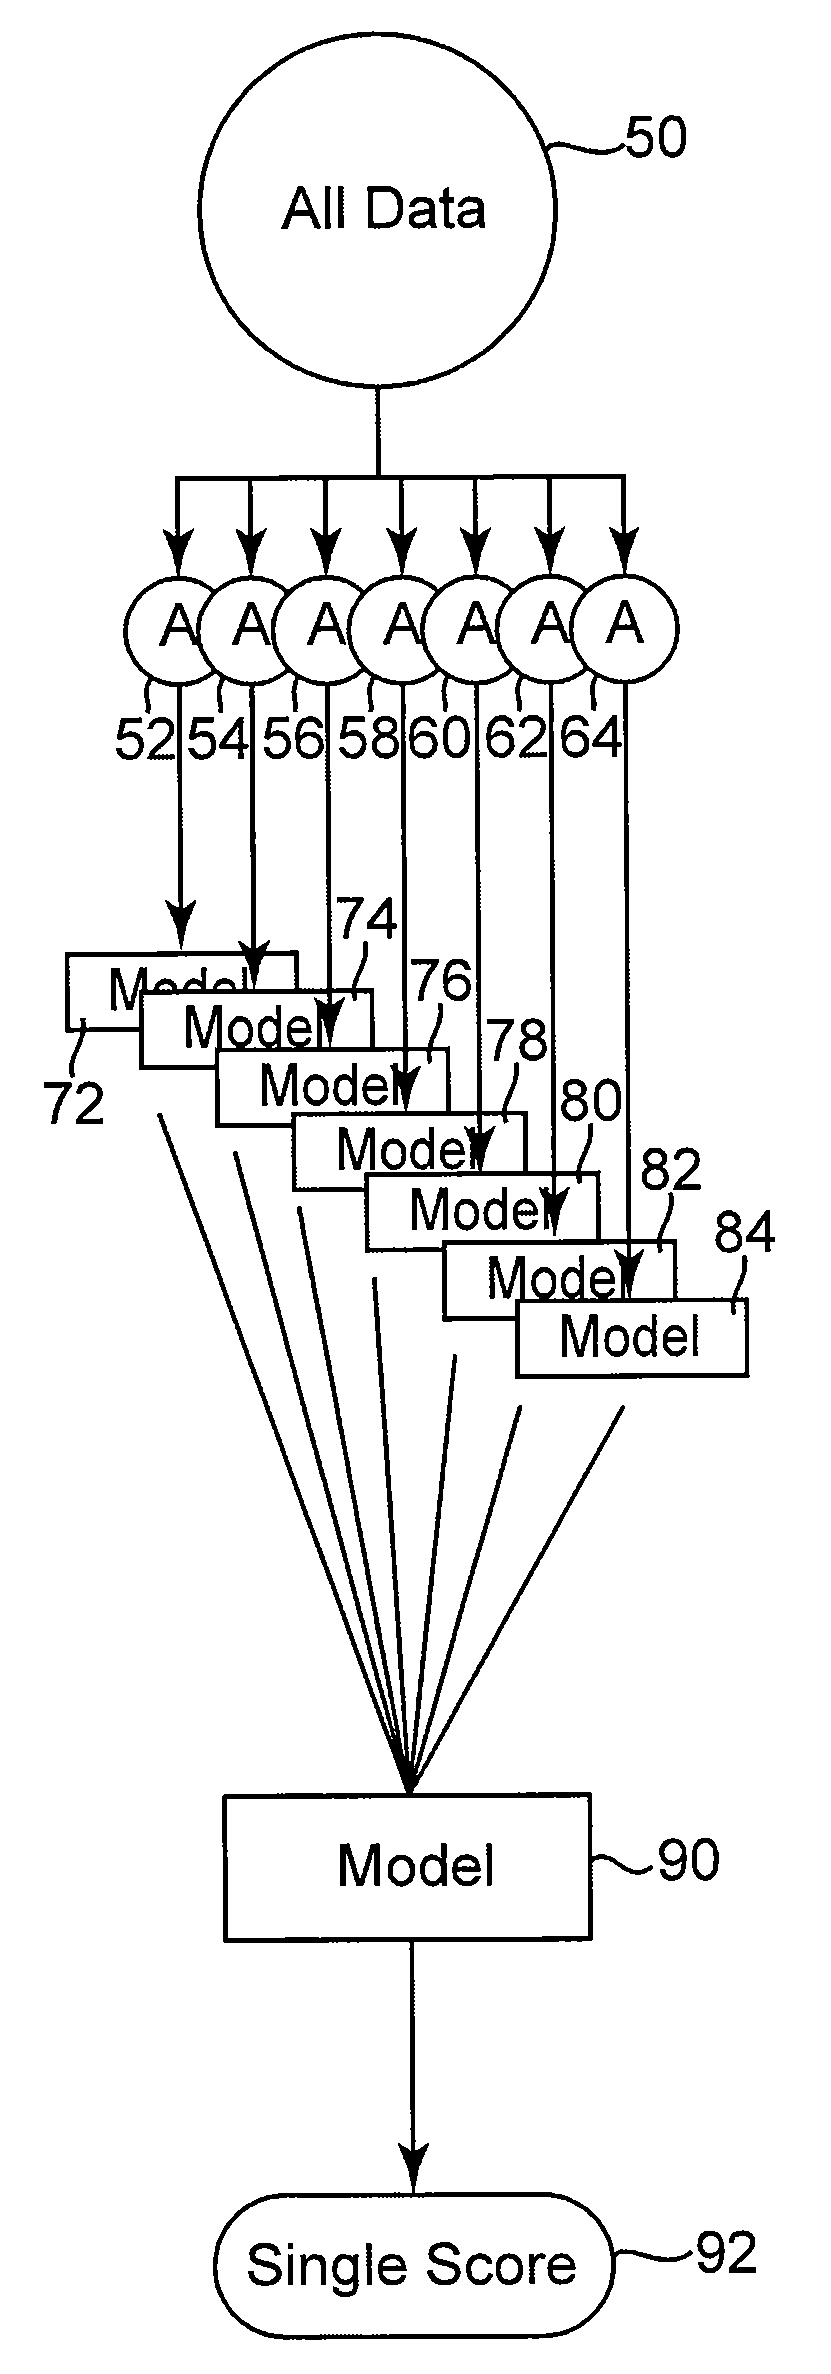 Segmented modeling of large data sets